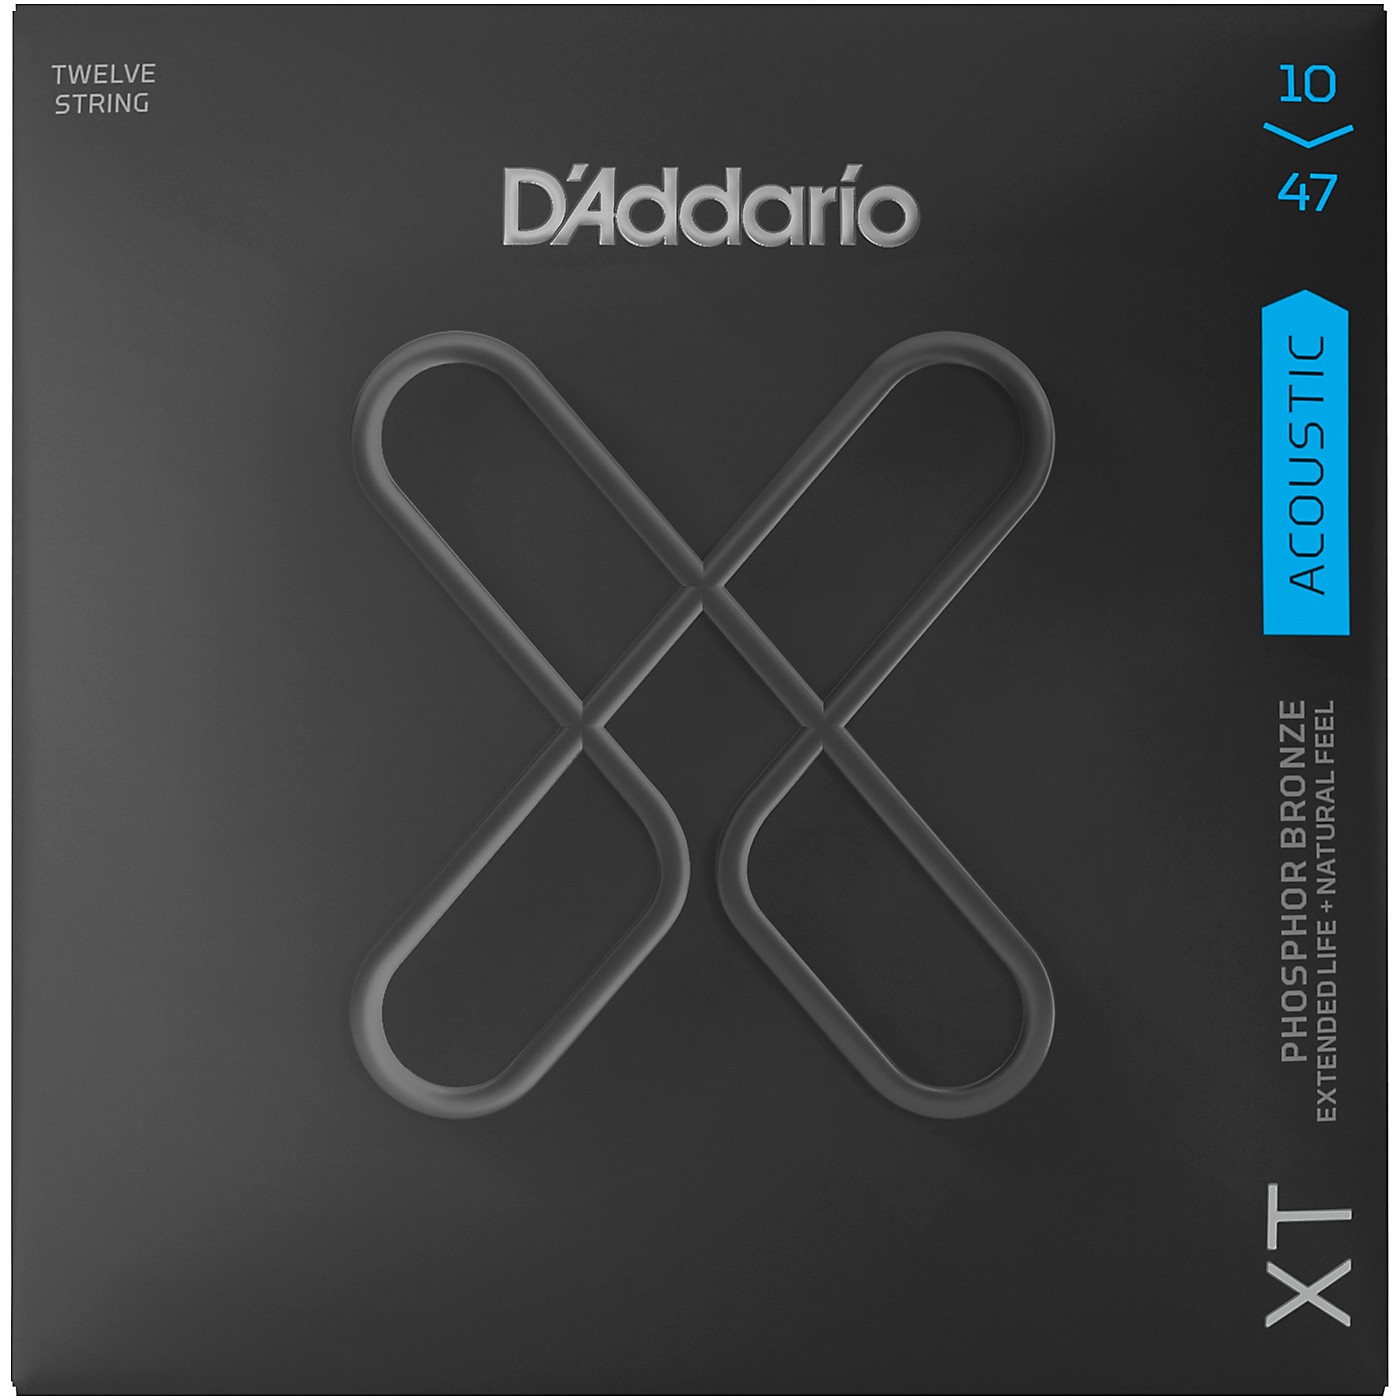 D'Addario XT Phosphor Bronze Acoustic Guitar Strings, 12-String Light, 10-47 thumbnail